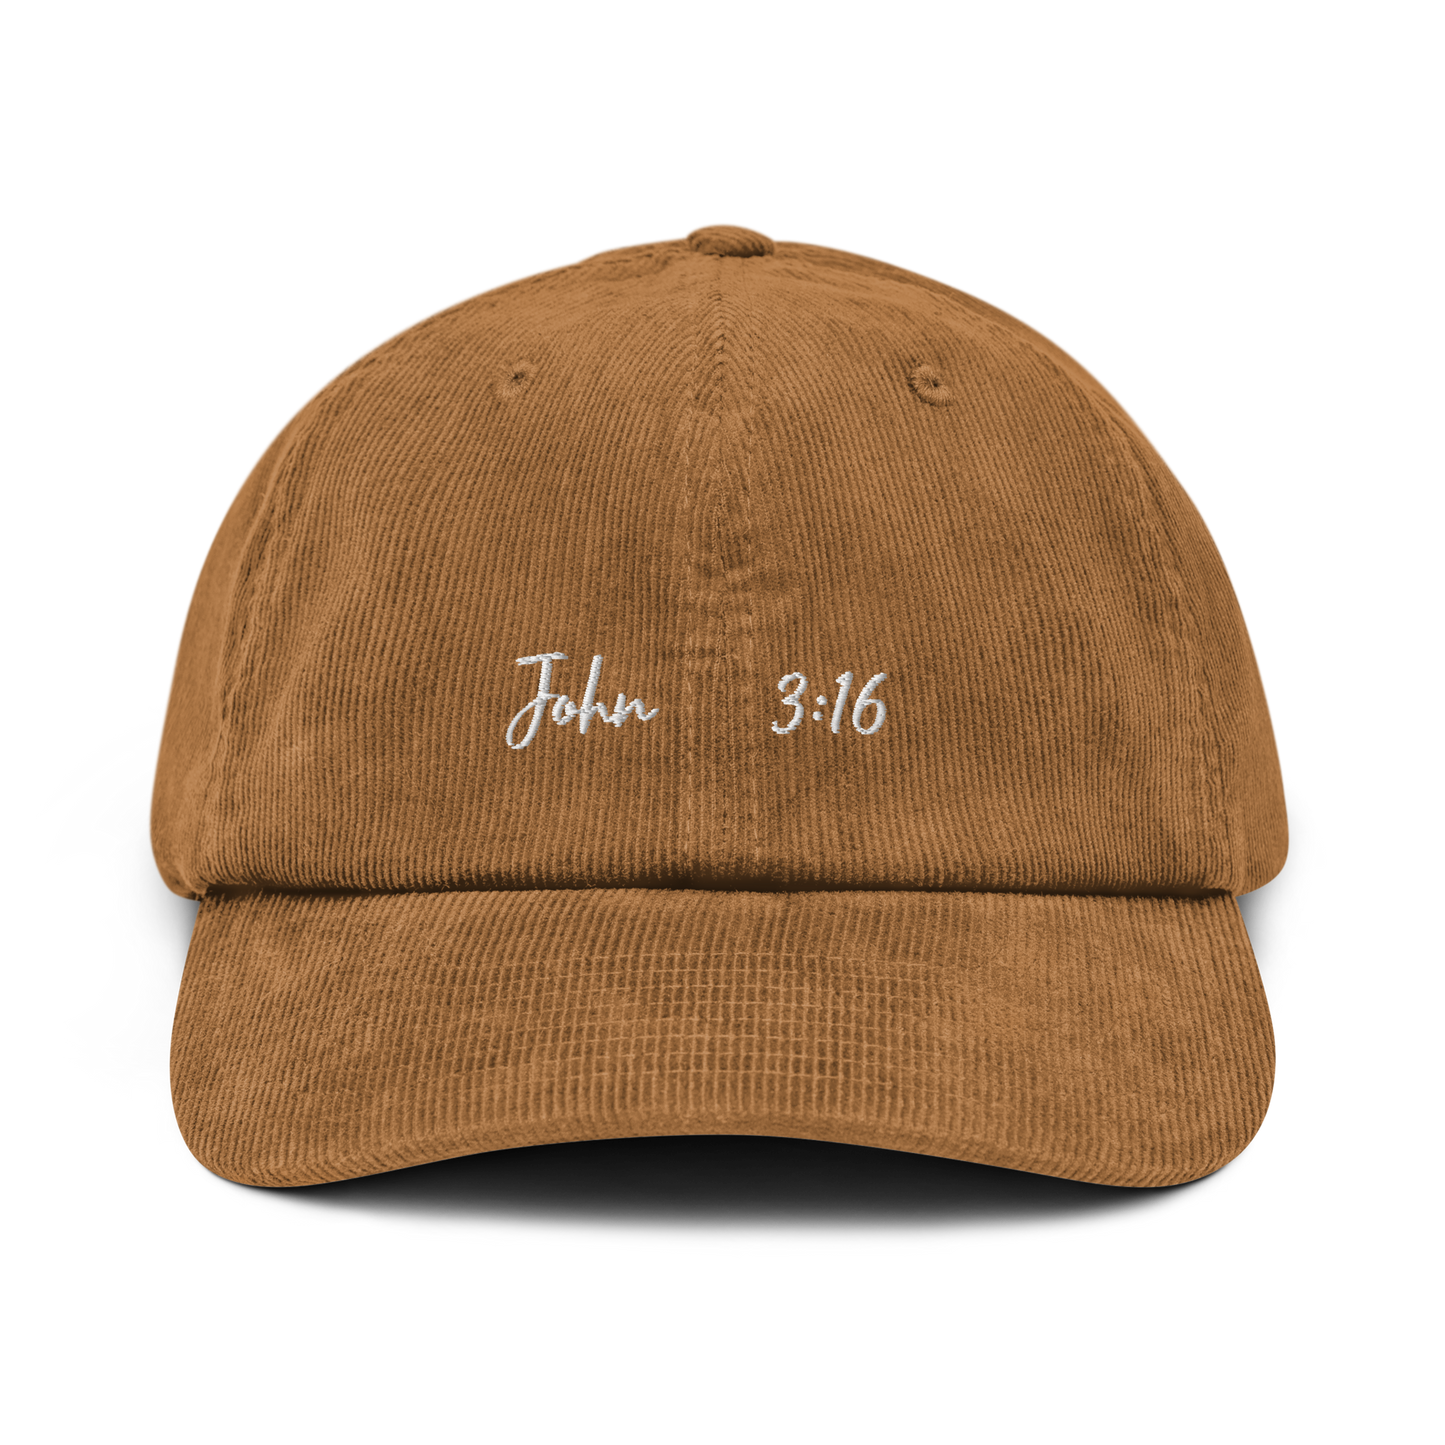 John 3:16 Corduroy hat